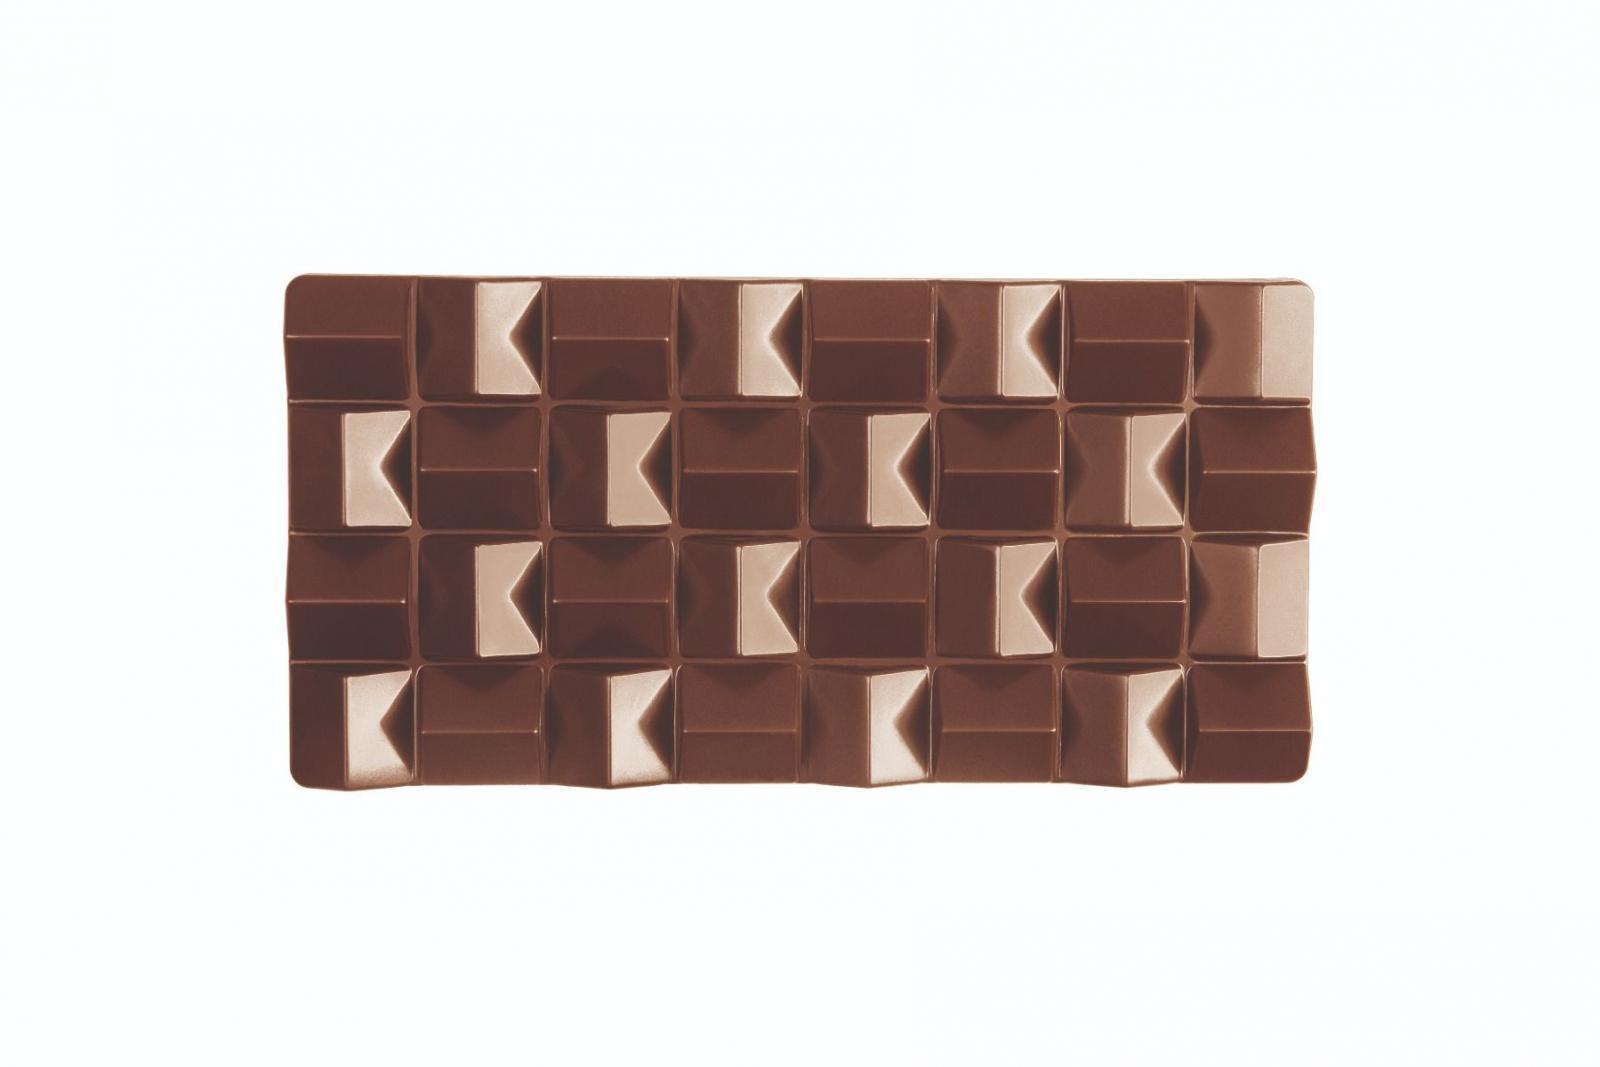 Polykarbonátová forma na tabuľkovú čokoládu Pixie od F. Fiorani, 275x175 mm -  PAVONI